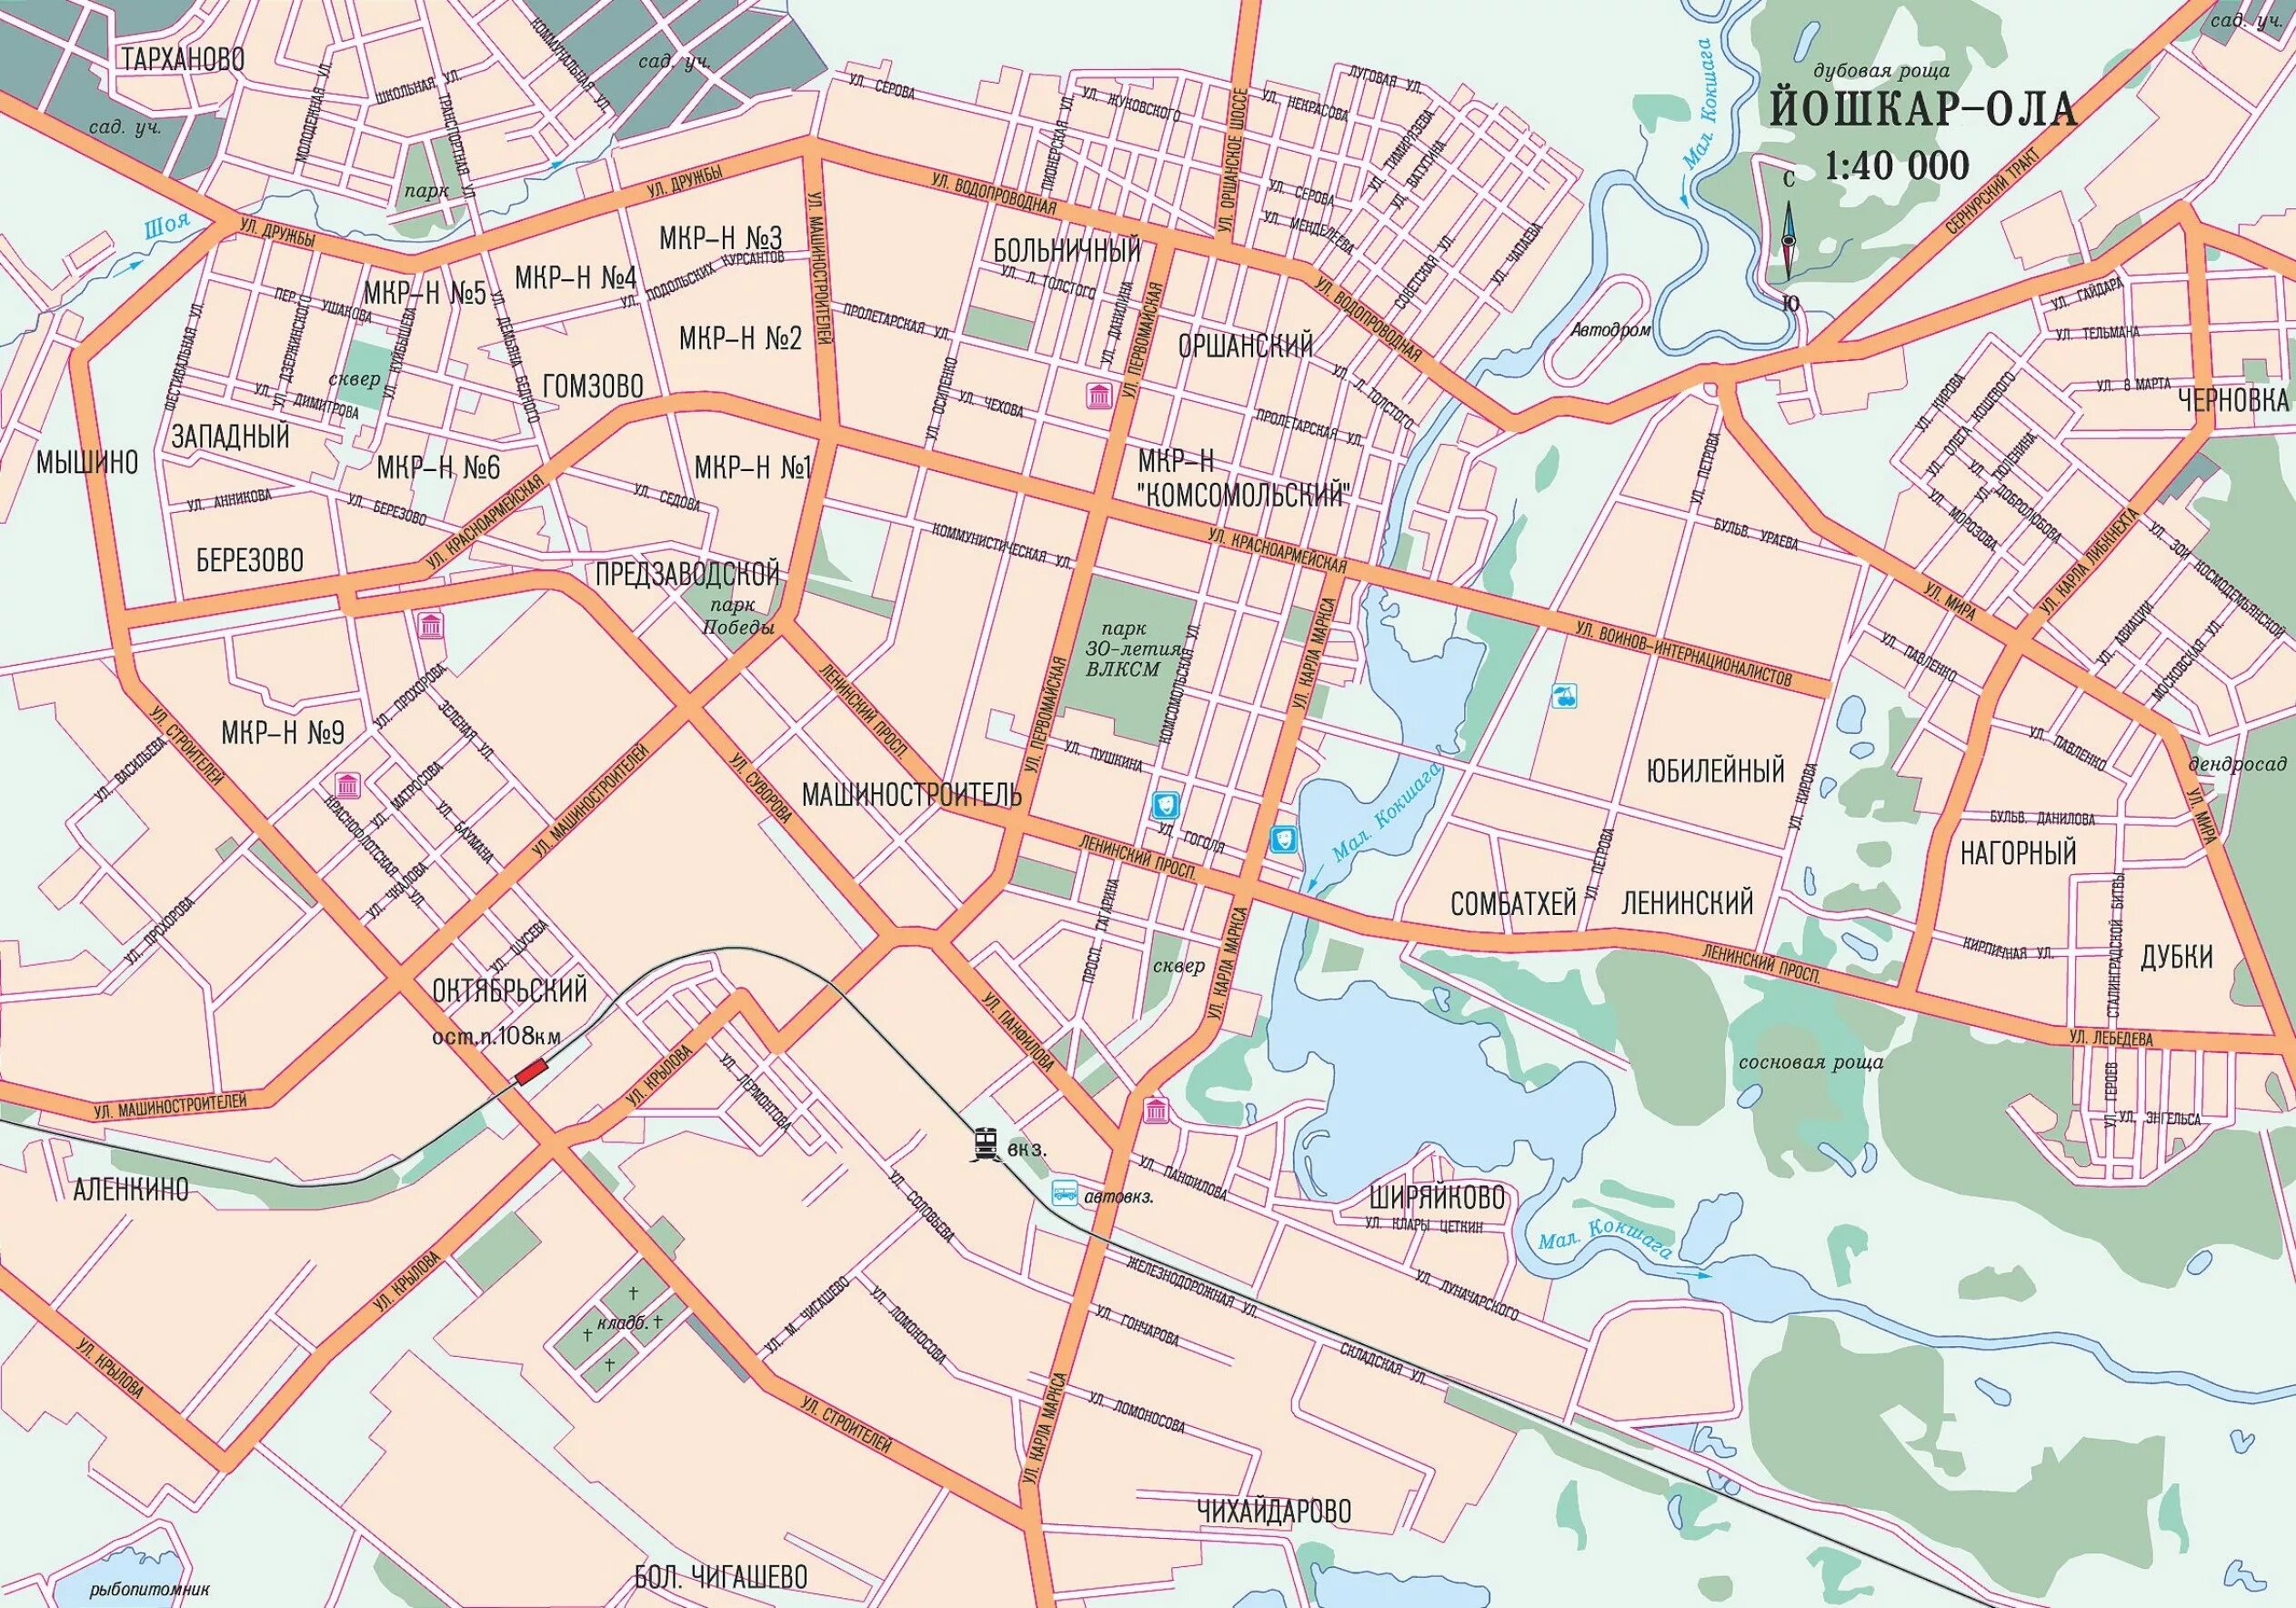 Микрорайоны Йошкар-Олы на карте города. Районы Йошкар-Олы на карте. Карта города Йошкар-Ола с улицами. План города Йошкар Ола.